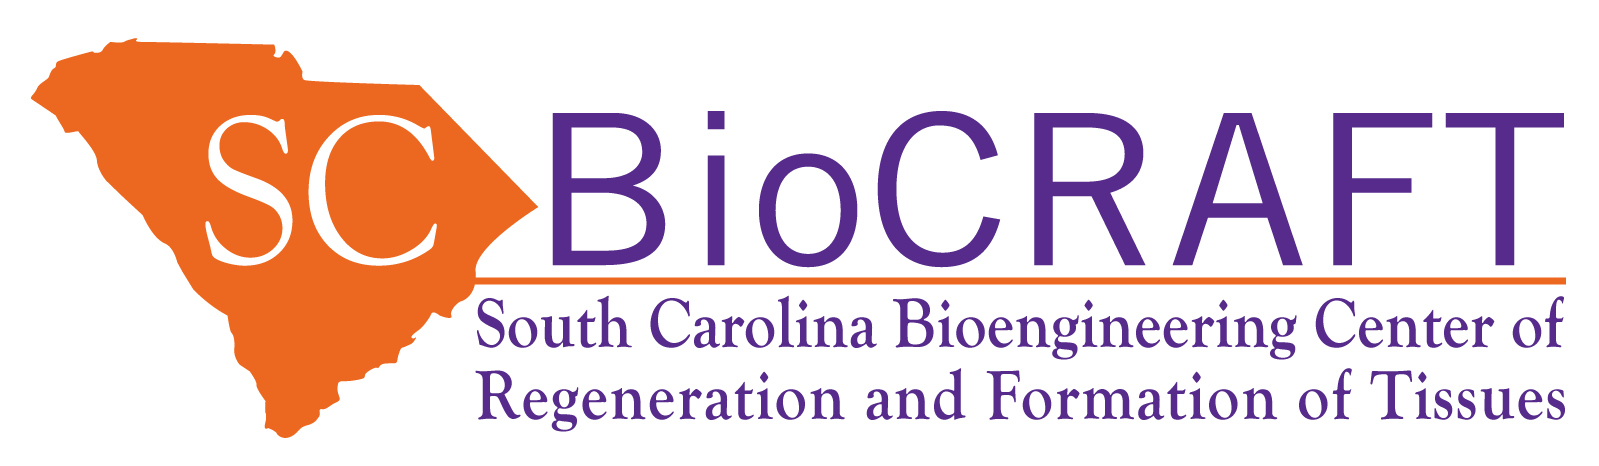 SC BioCRAFT Logo